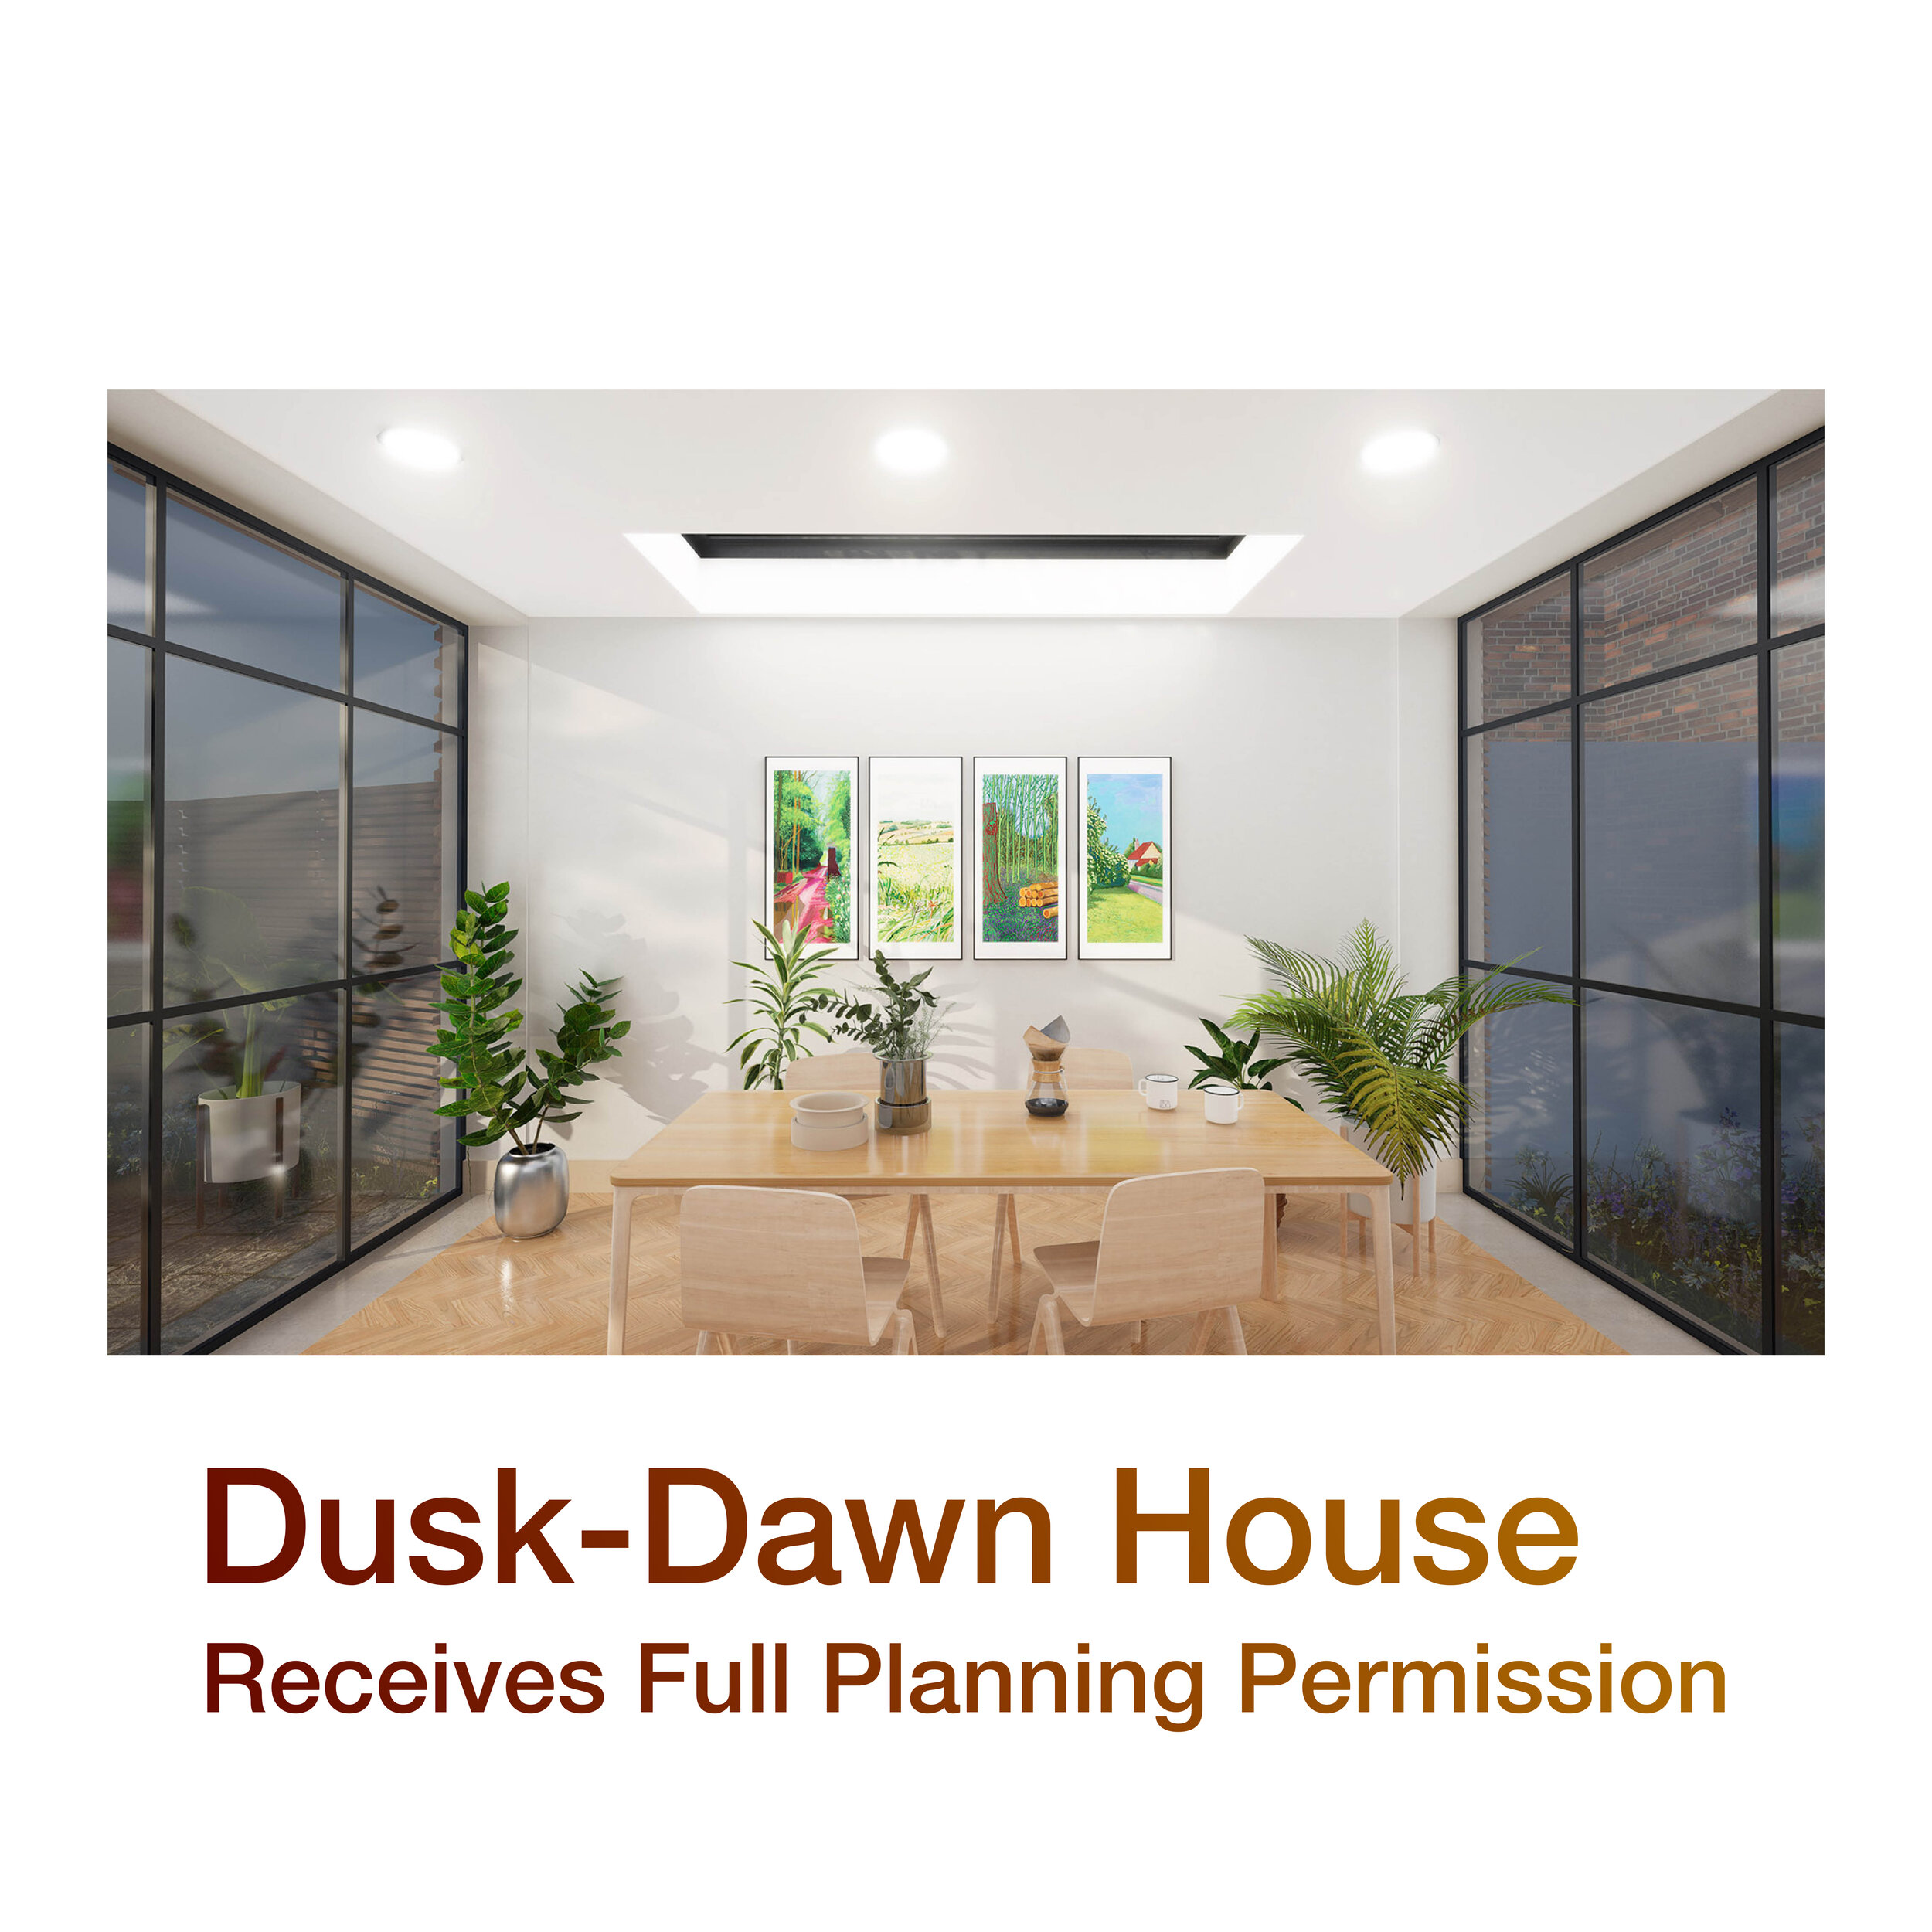 Dusk-Dawn House 9_Receives Full Planning Permission_Sustainable Cottingham Architects_Samuel Kendall Associates